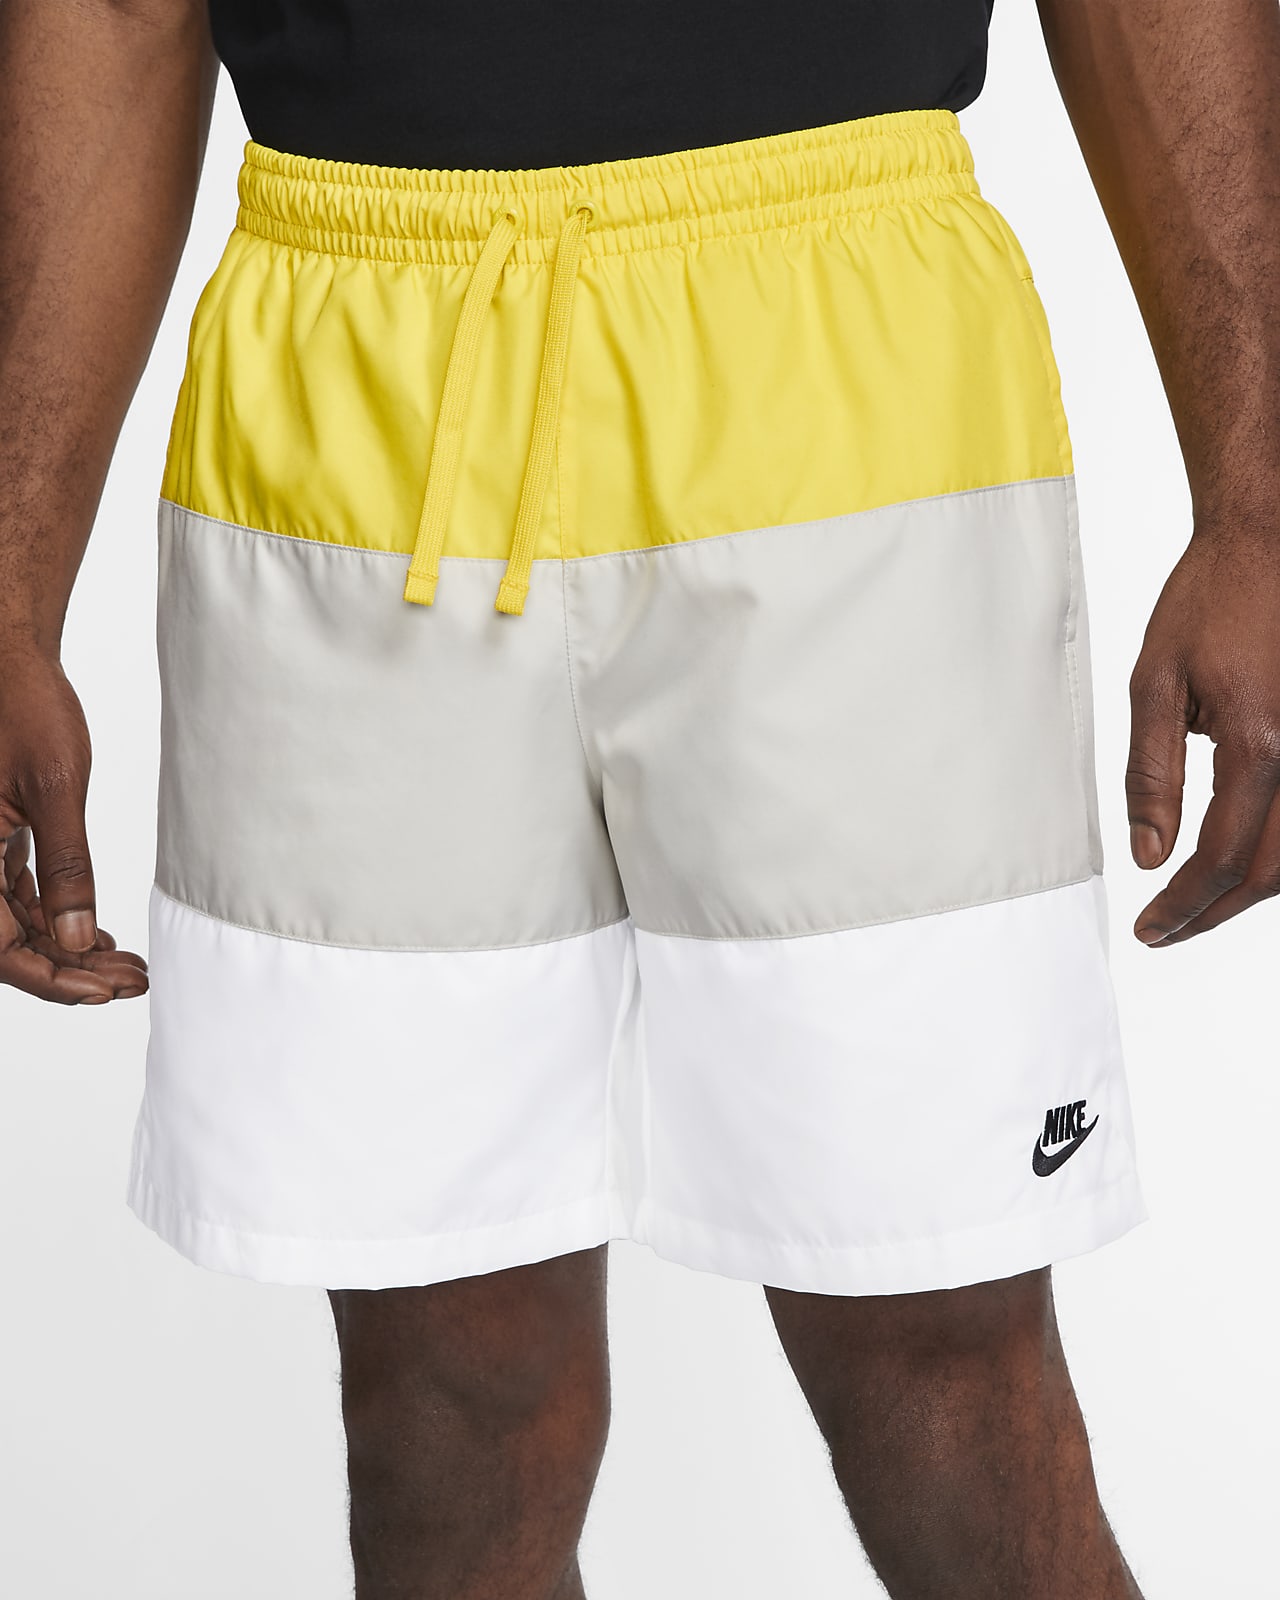 yellow and white nike shorts